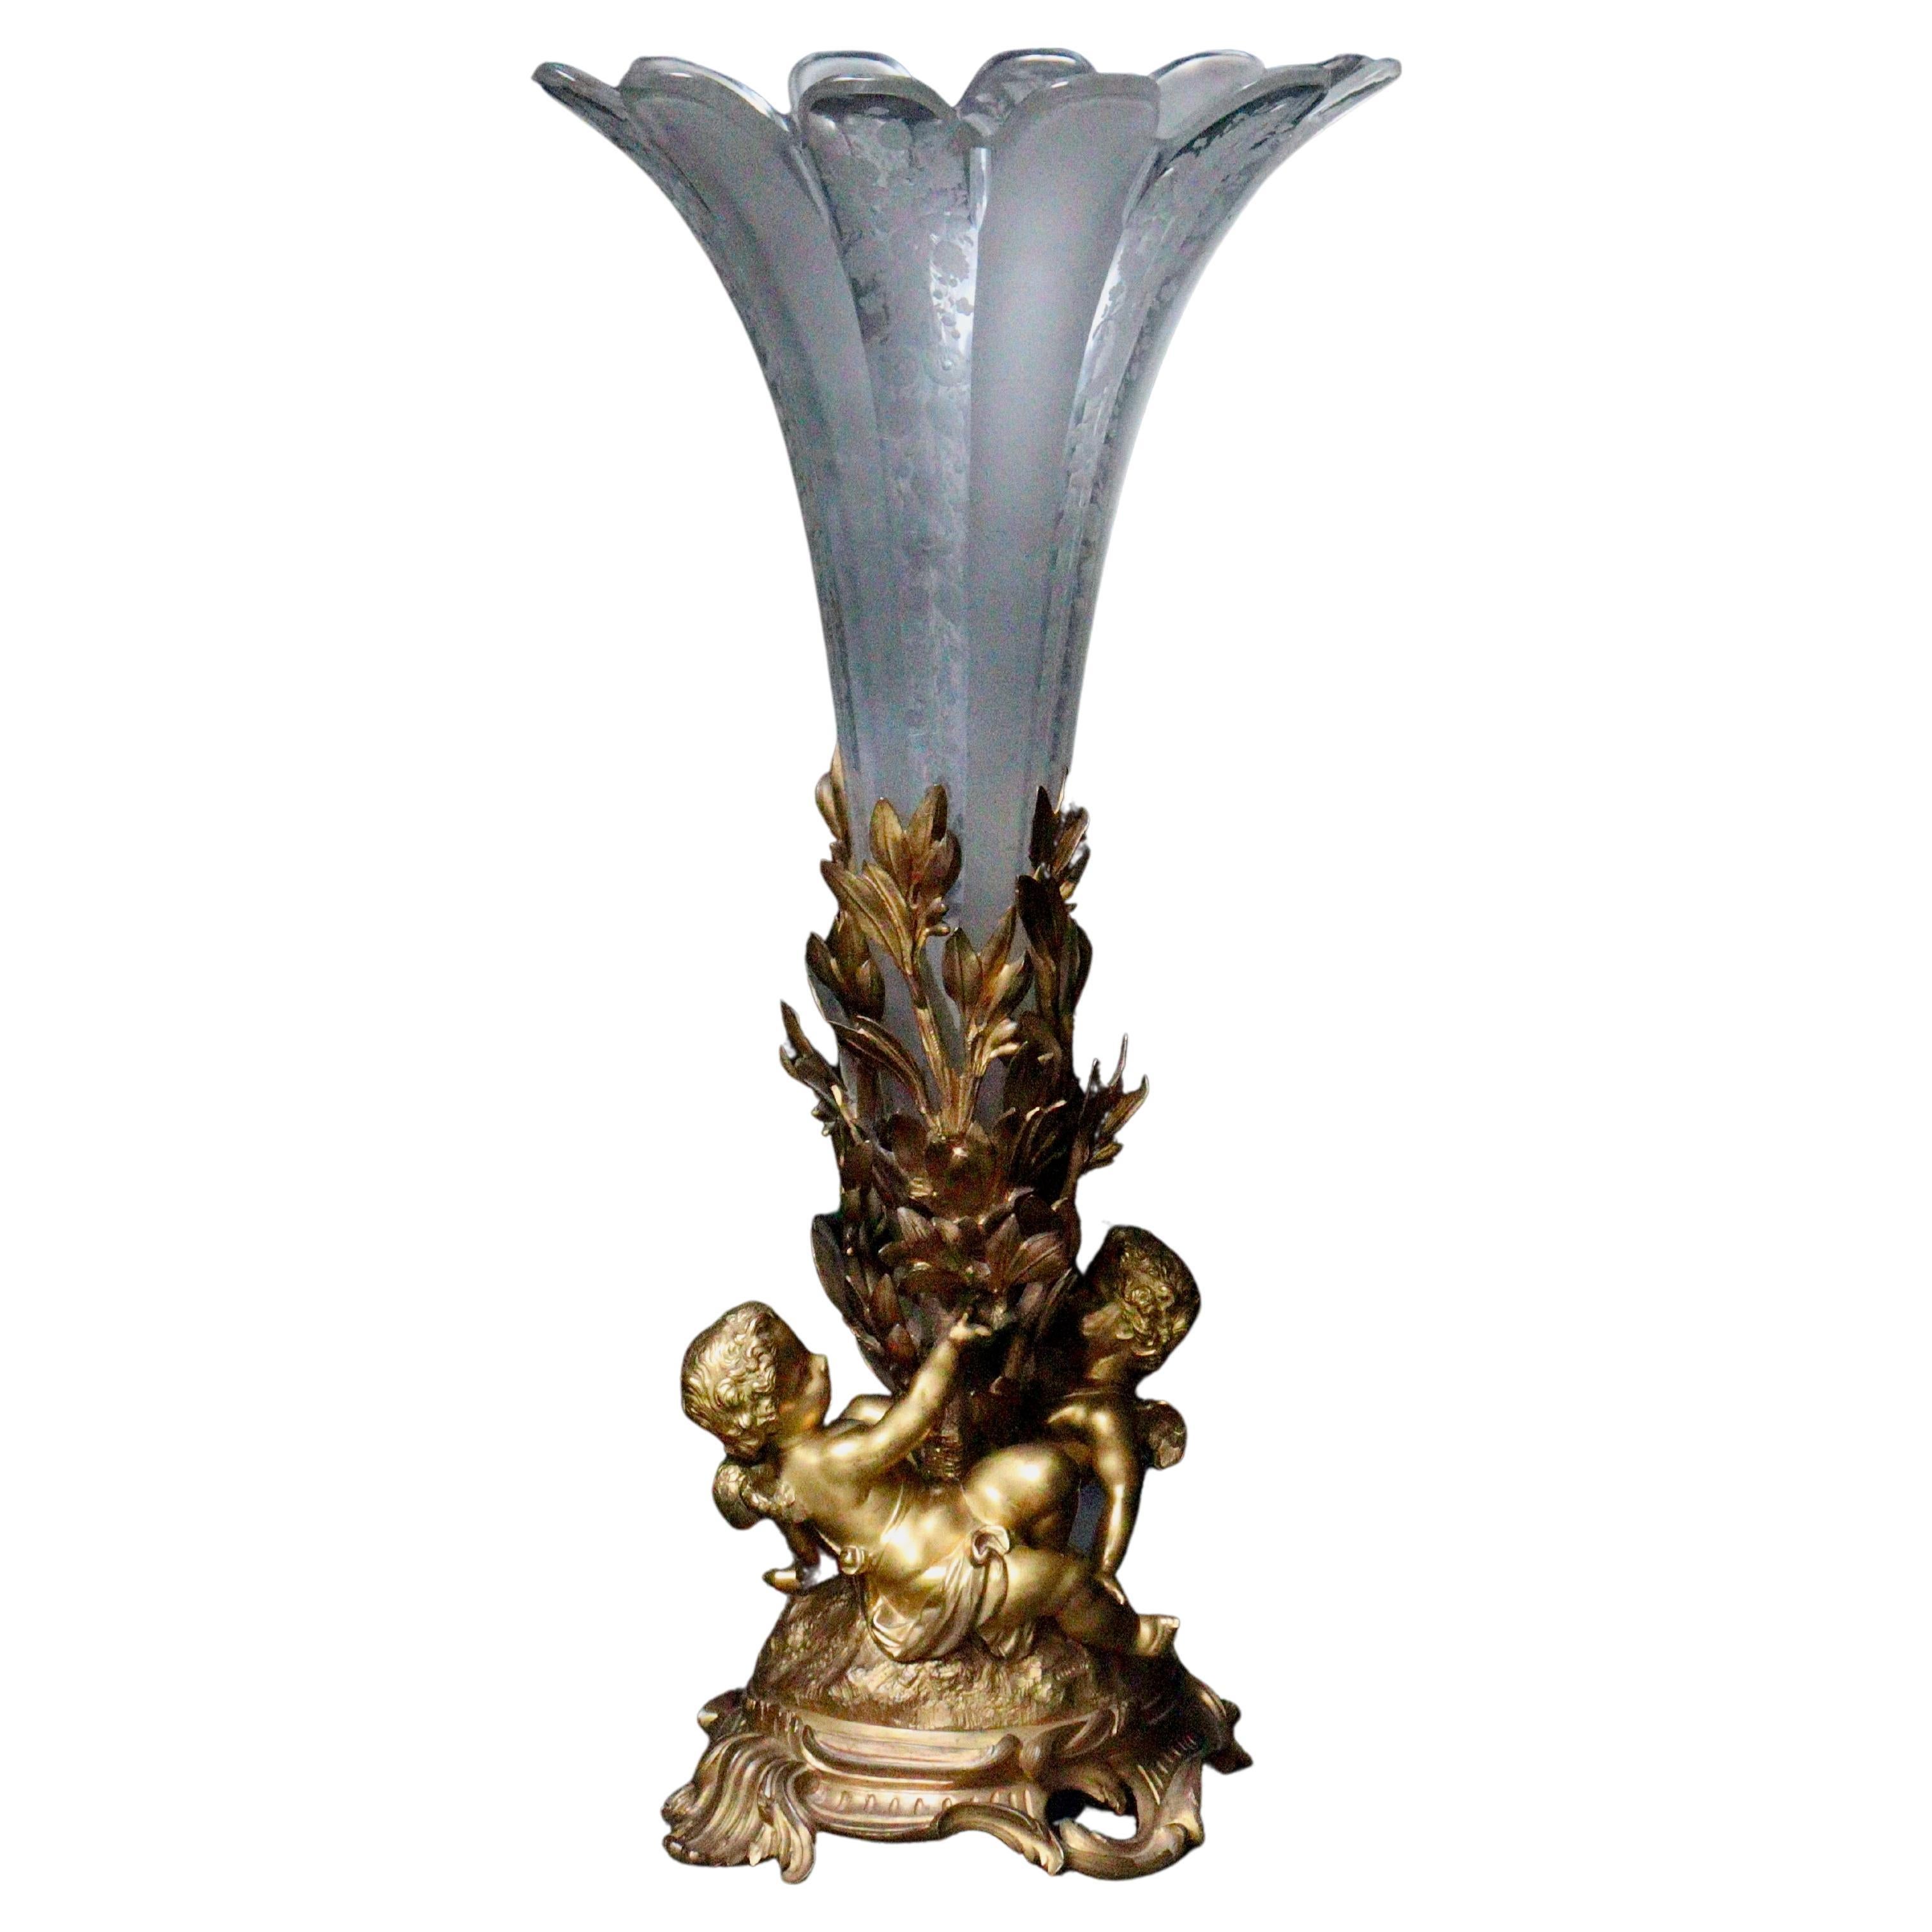 Napoleon III 19th Century, French, Baccarat Crystal and Ormolu Cornet Vase Centerpiece